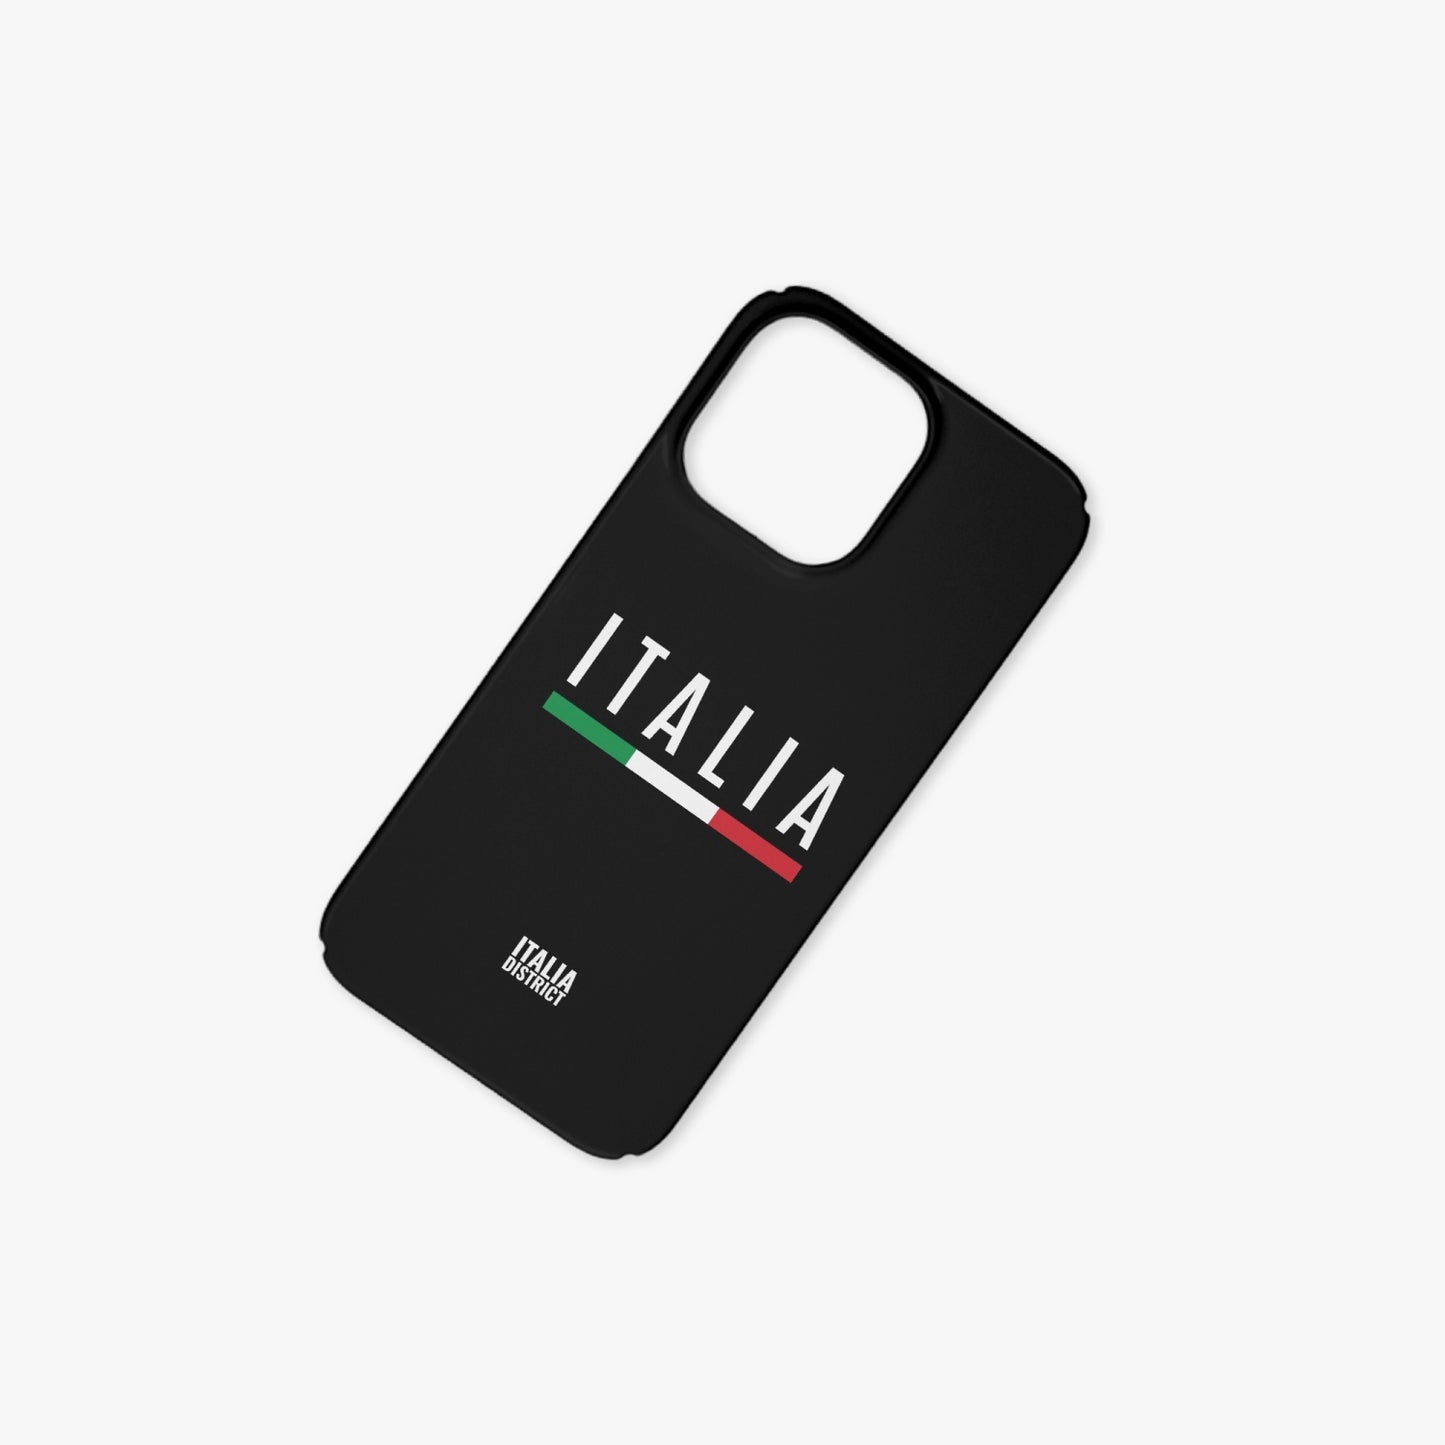 Italy Black Phone Case iPhone 14 Pro Max